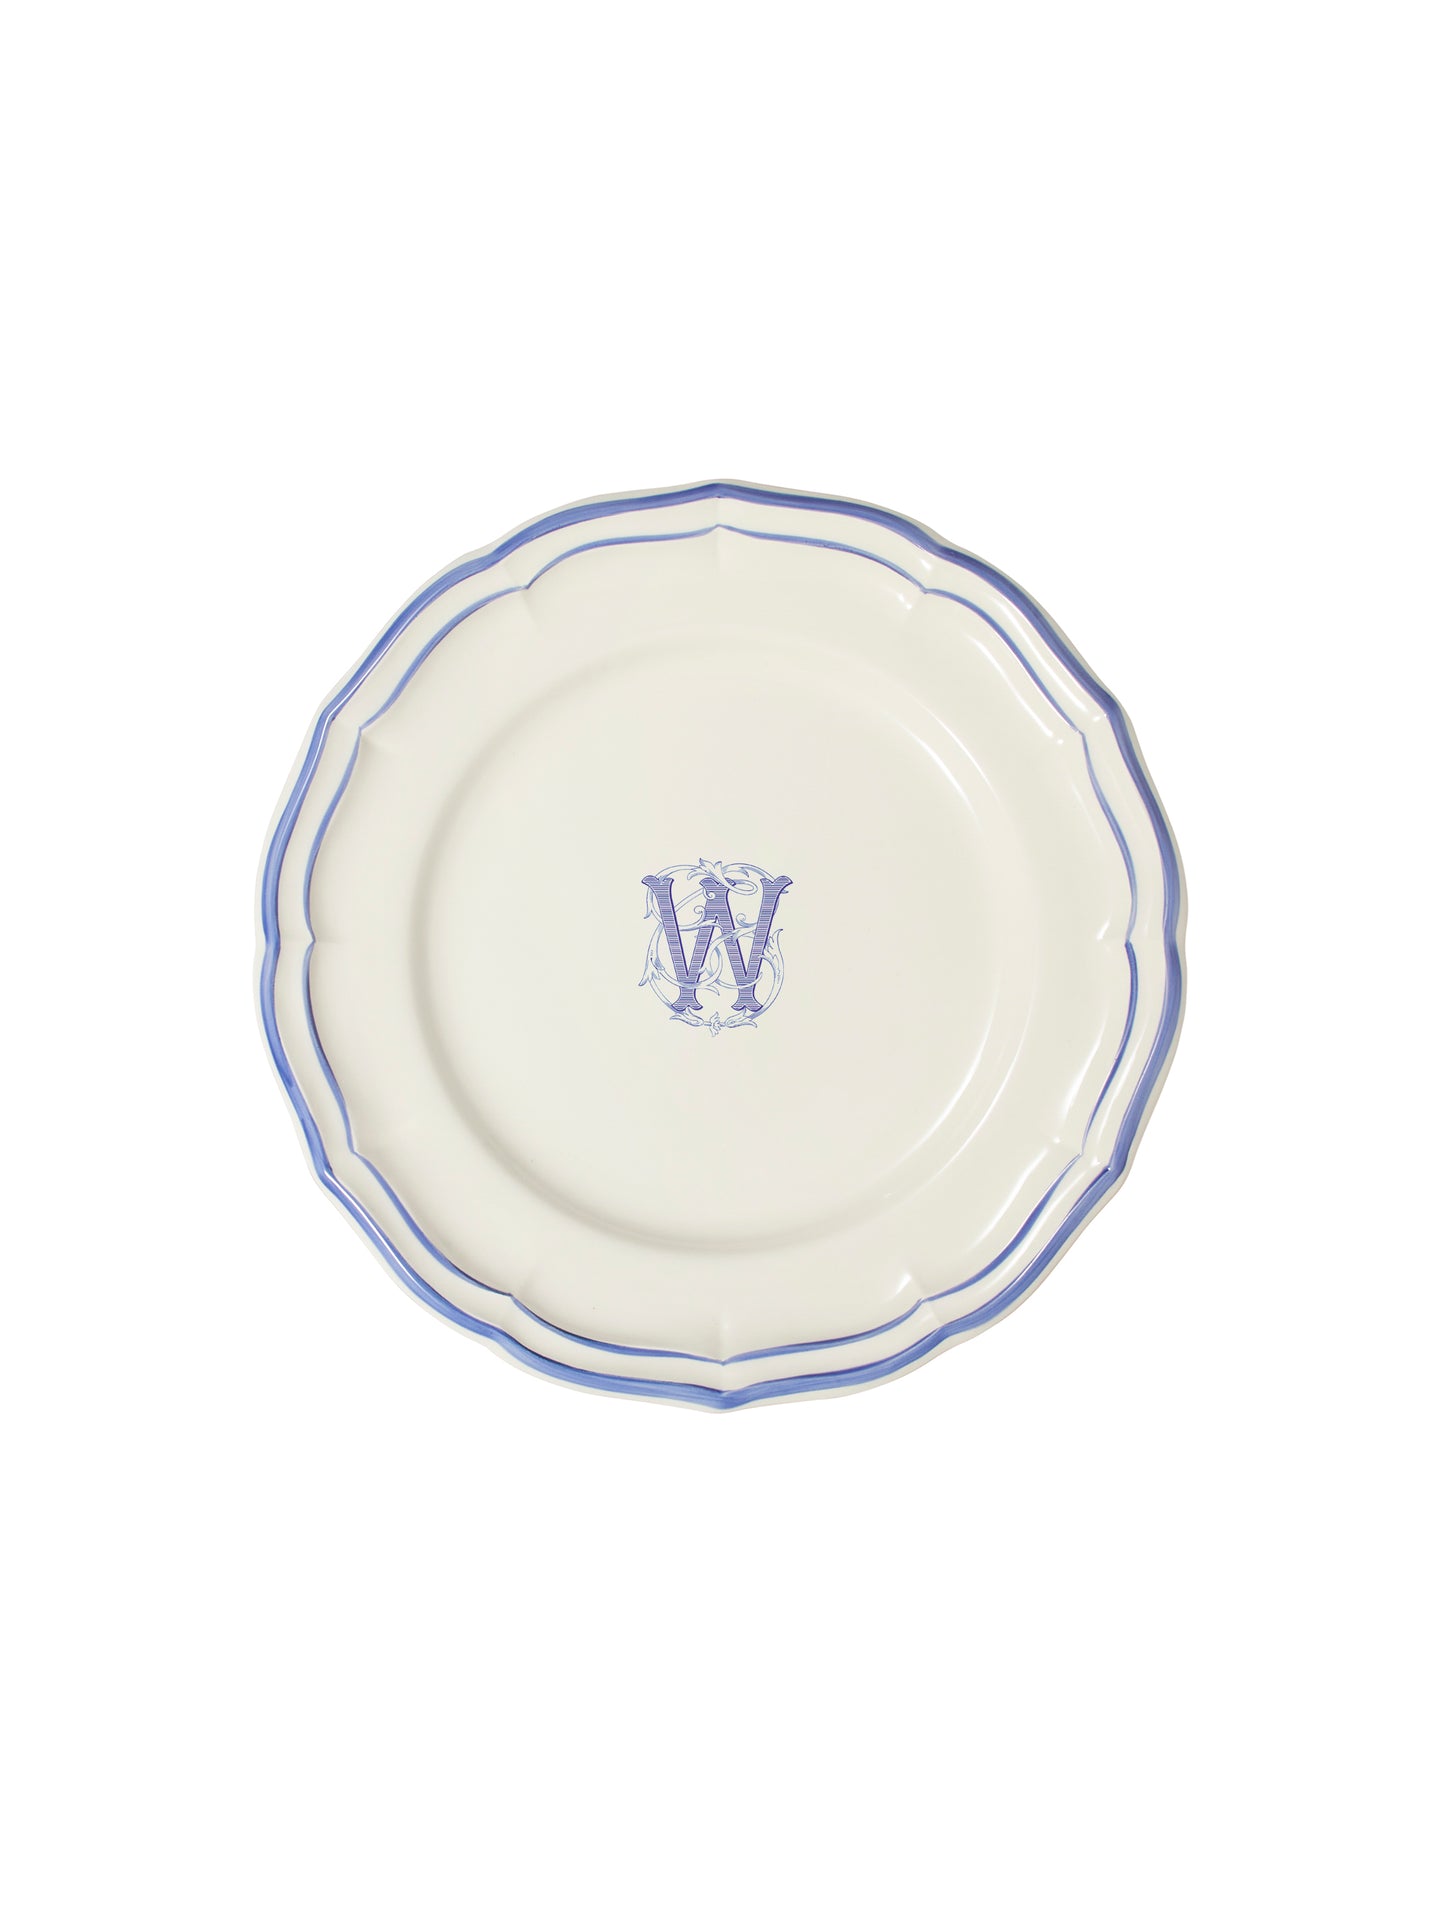 Gien Filet Bleu Monogram Salad Plate W Weston Table